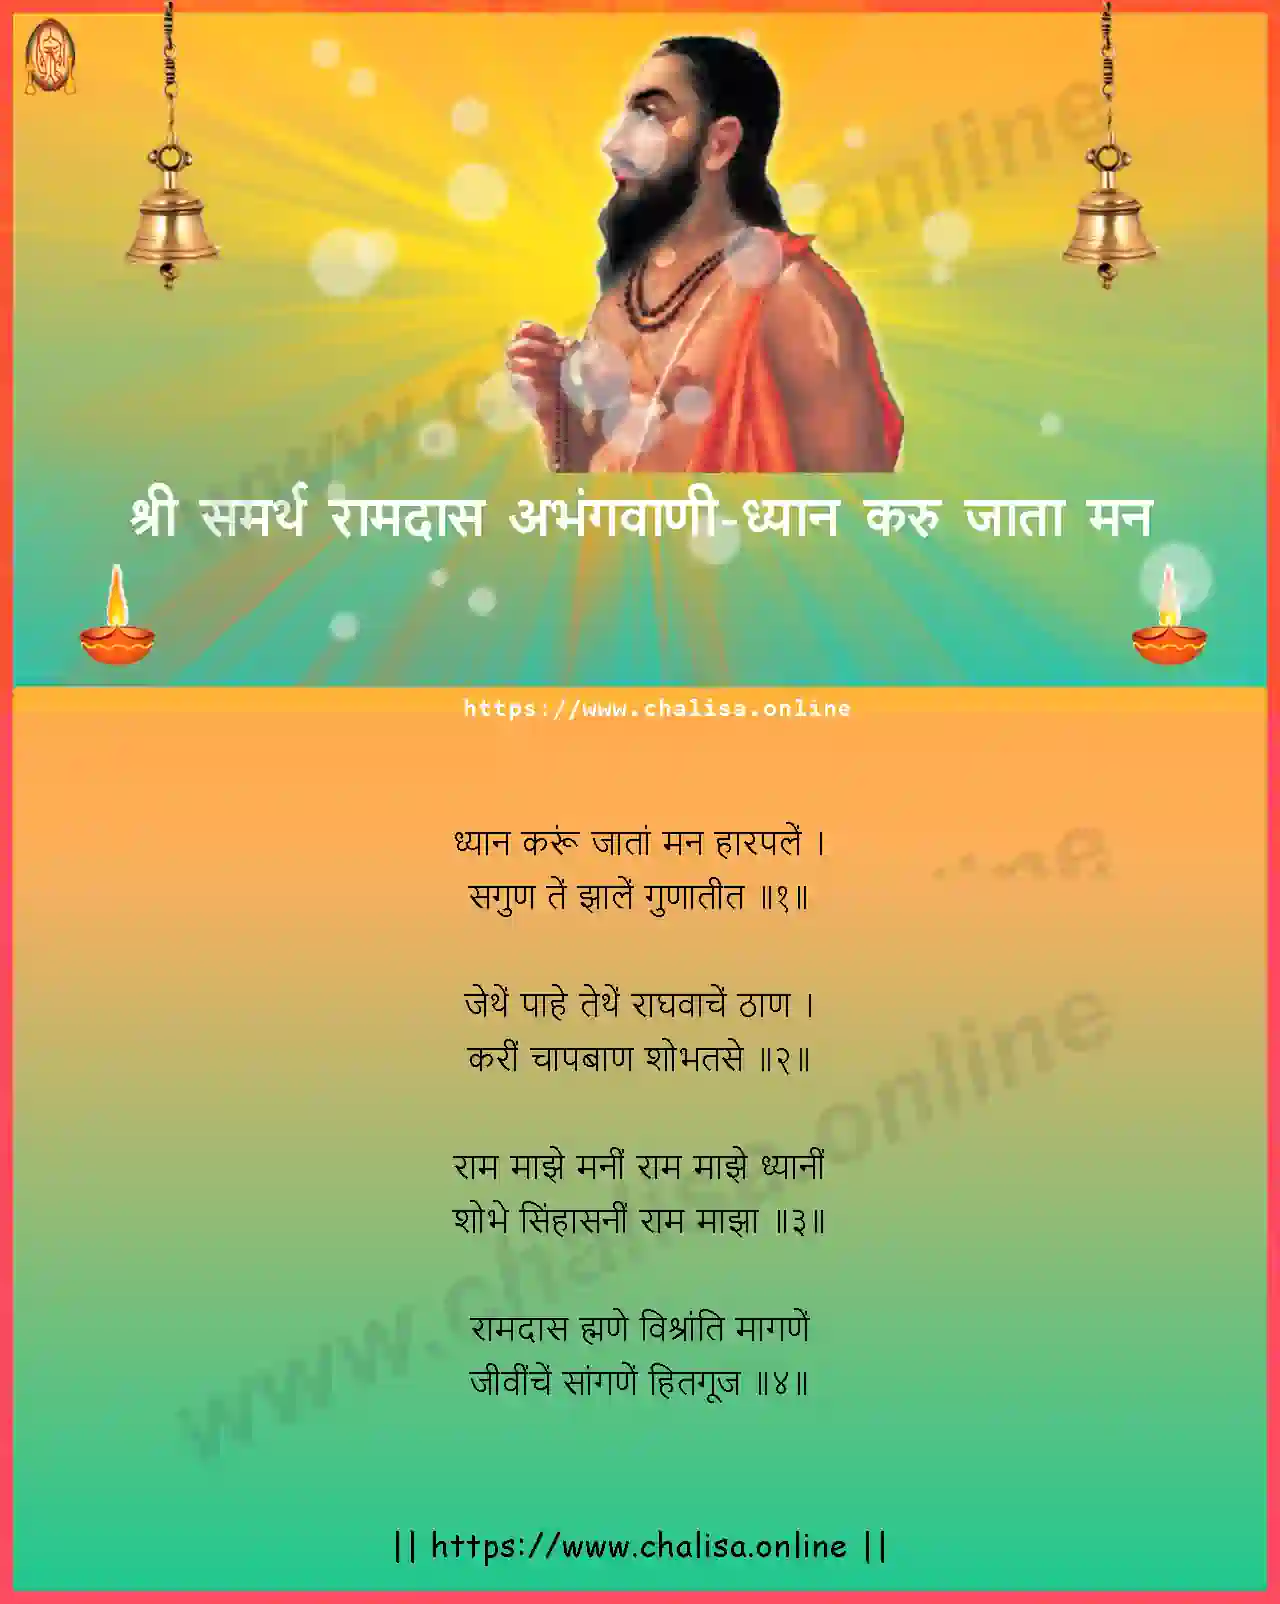 dhyan-karu-jata-man-shri-samarth-ramdas-abhang-marathi-lyrics-download